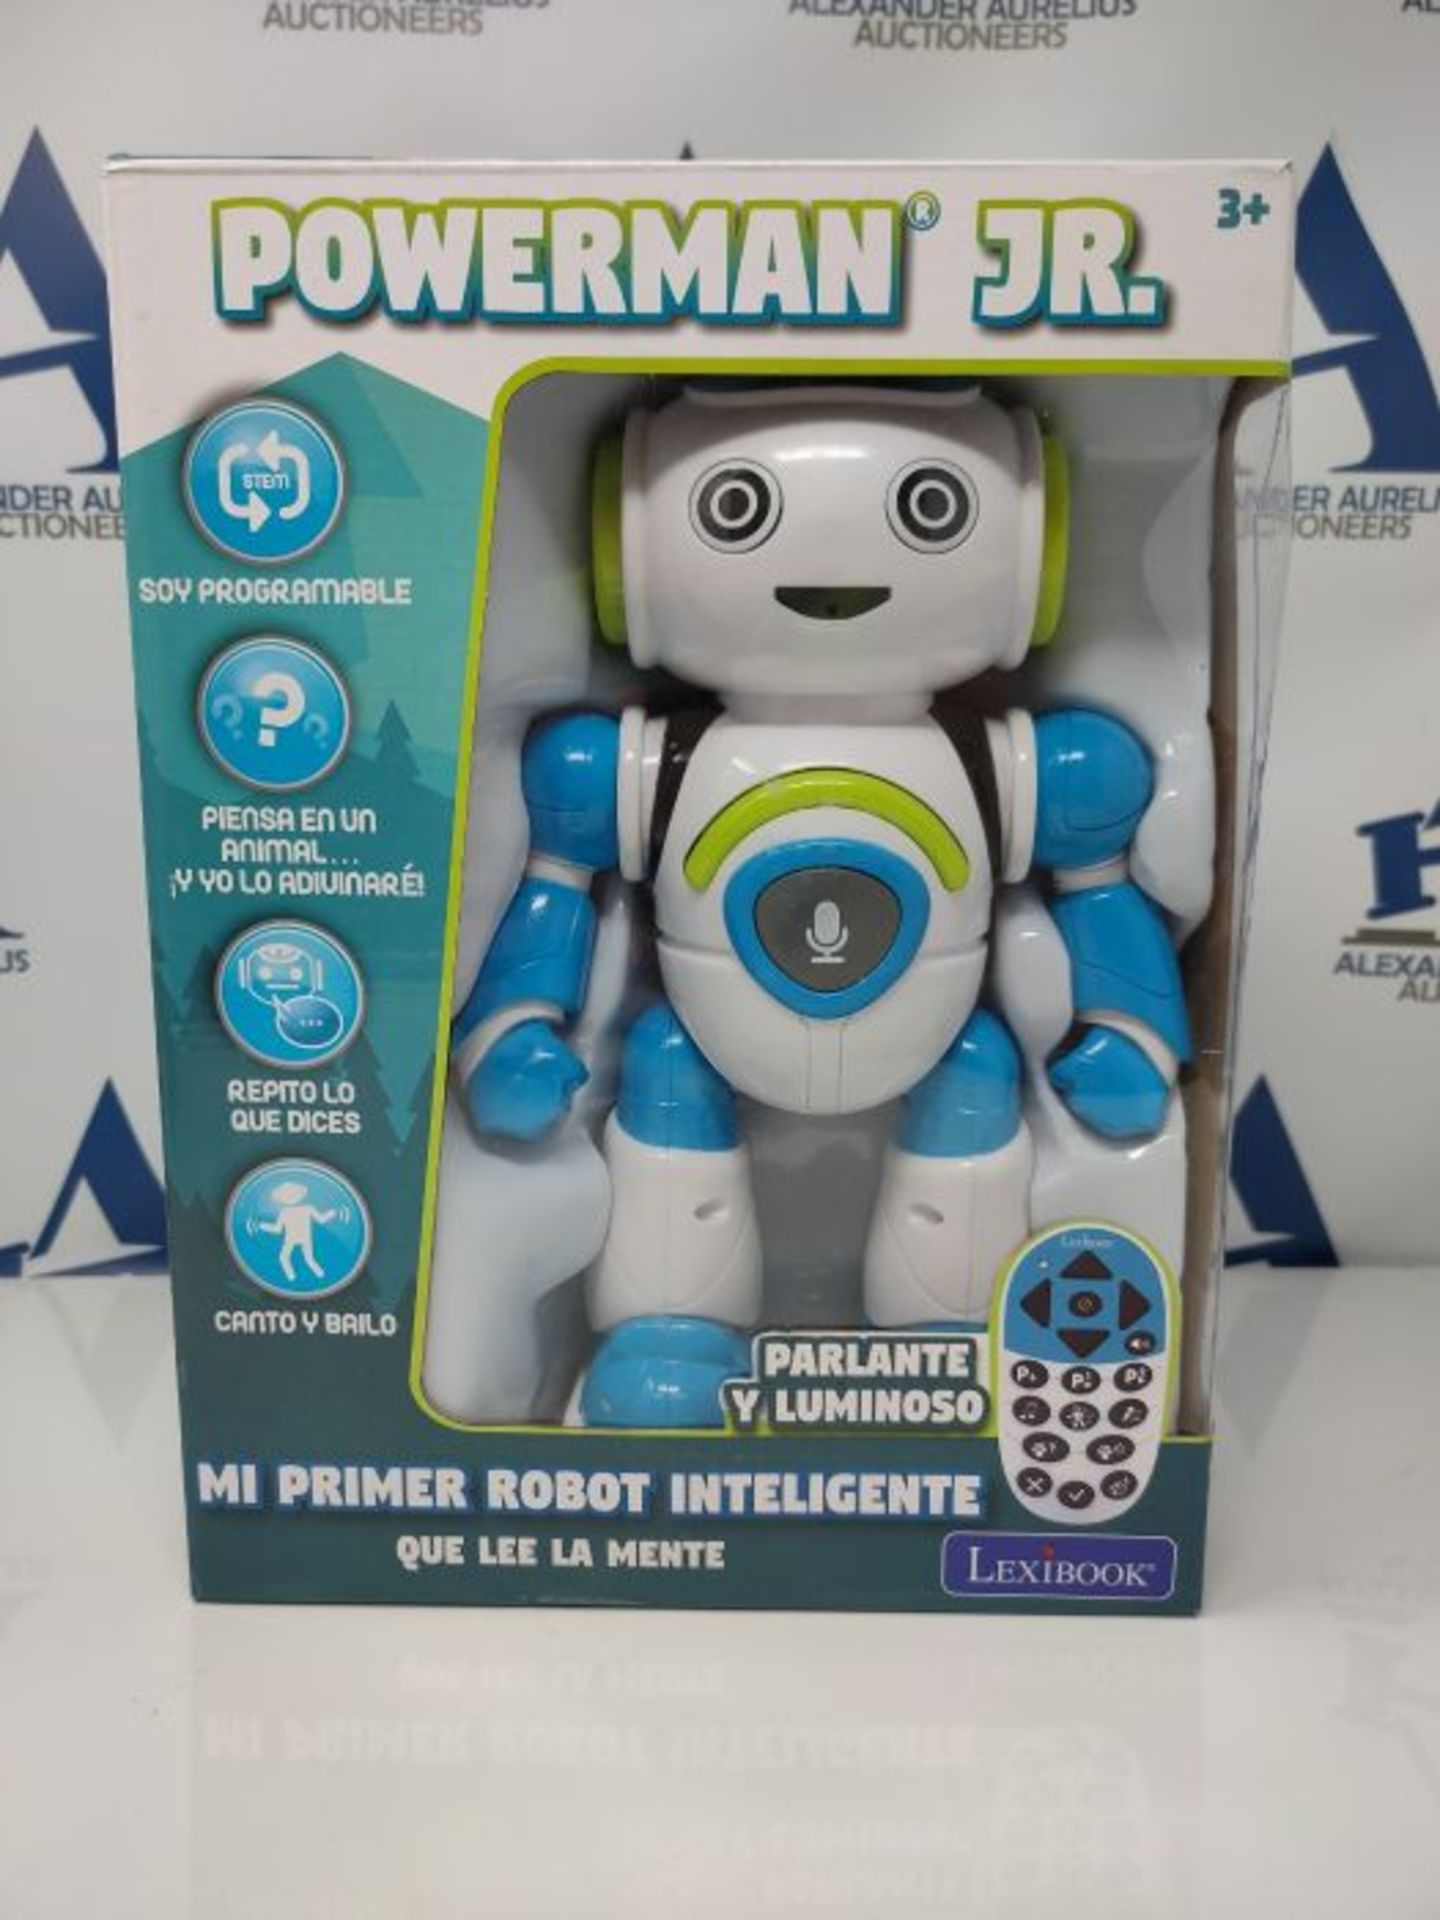 LEXIBOOK Smart Robot Powerman Junior Educational and Interactive Read Mind Dance Play - Image 2 of 3